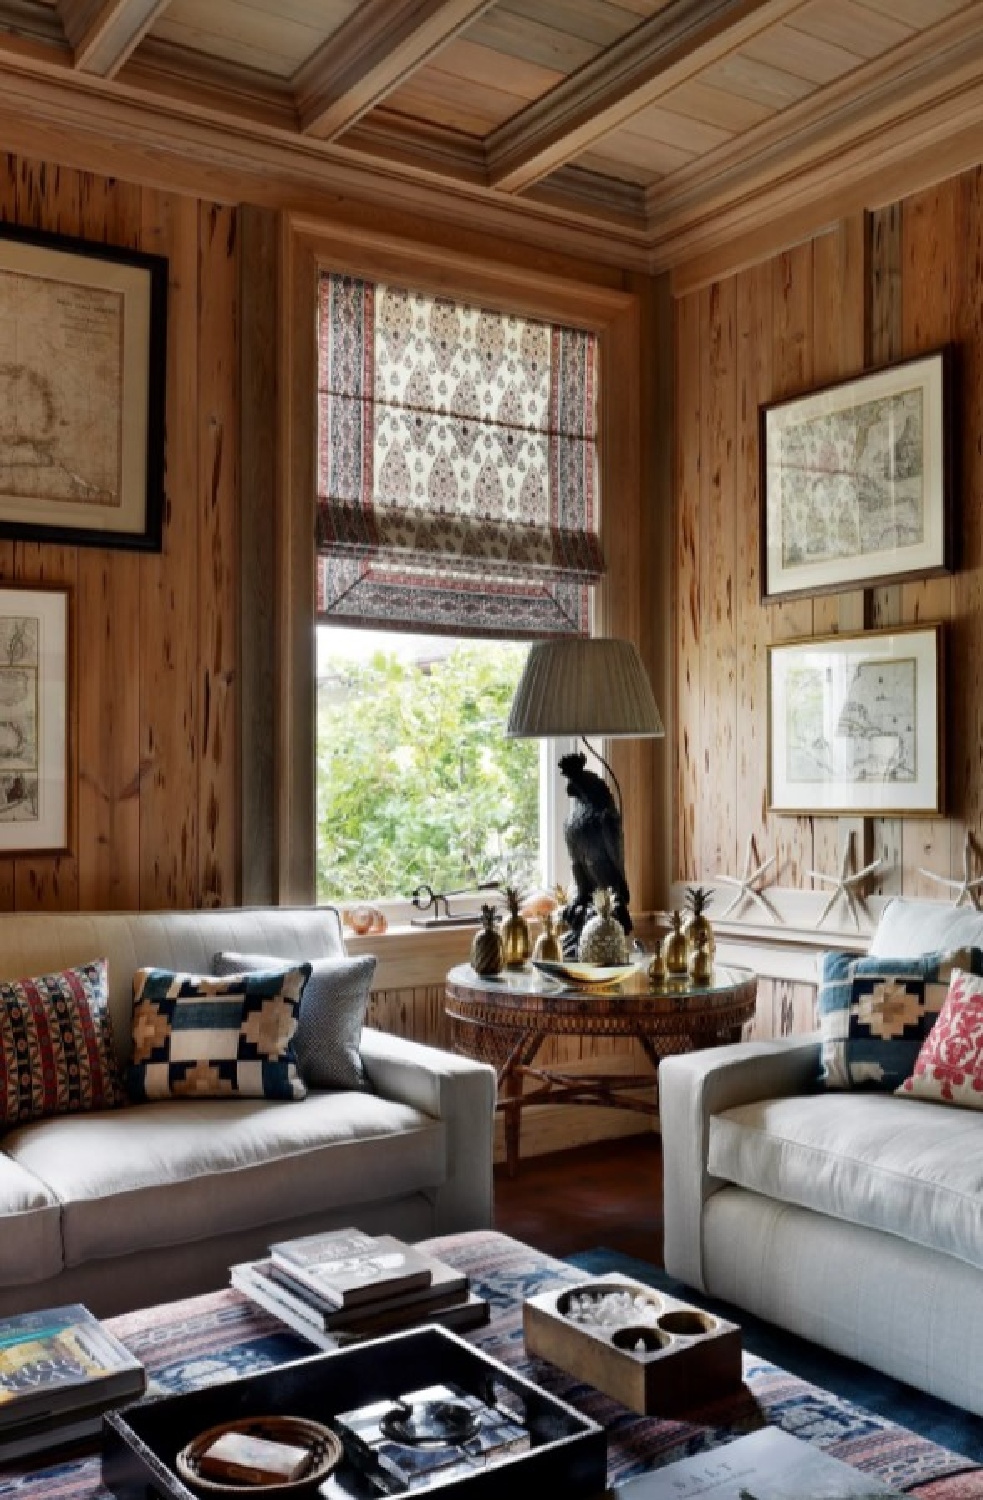 John McCall designed cozy snug room with wood paneling (photo Alexander James for House & Garden UK).